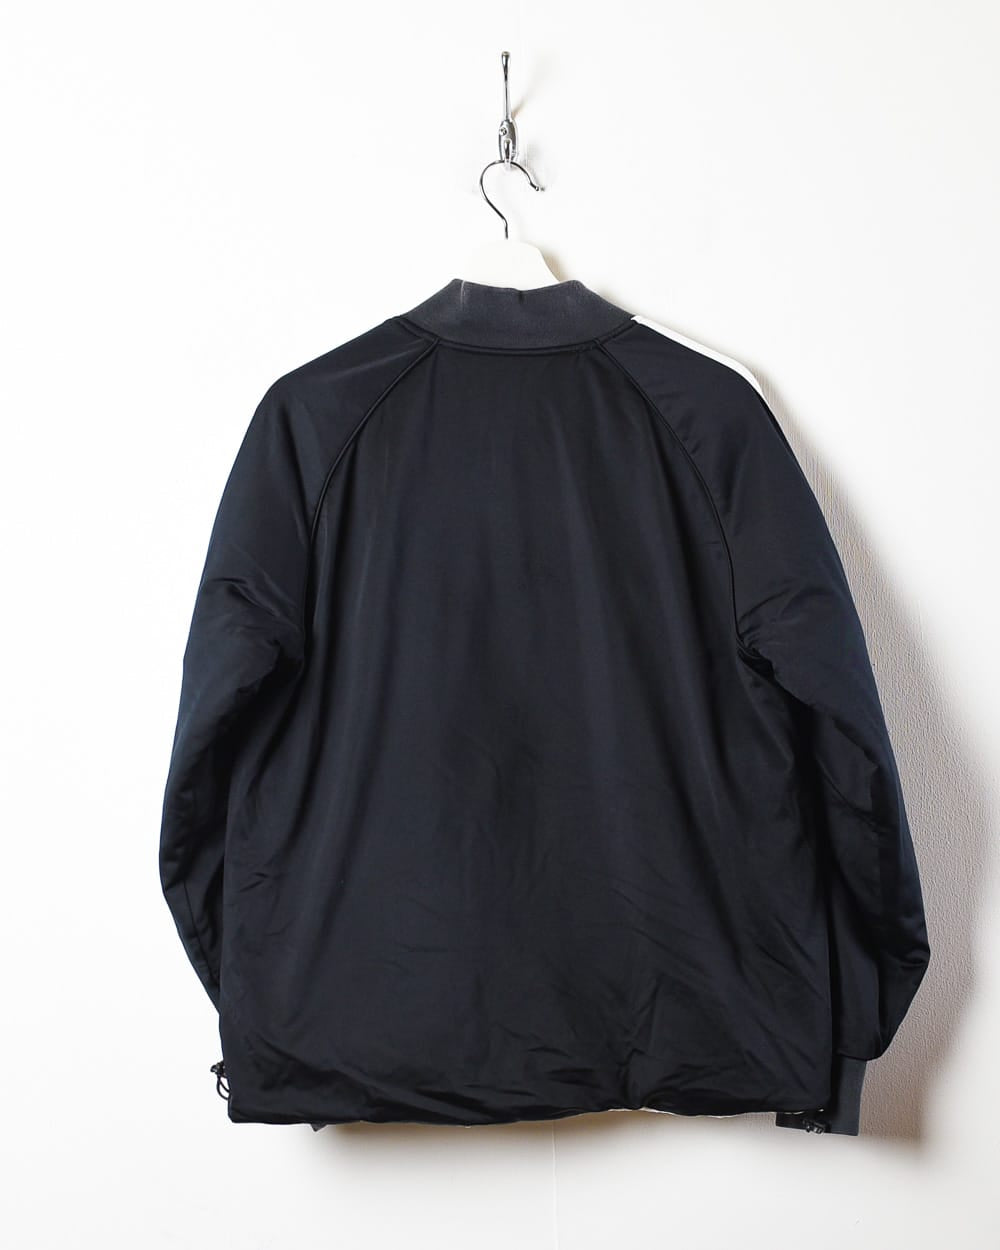 Black Adidas Reversible Puffer Jacket - Small